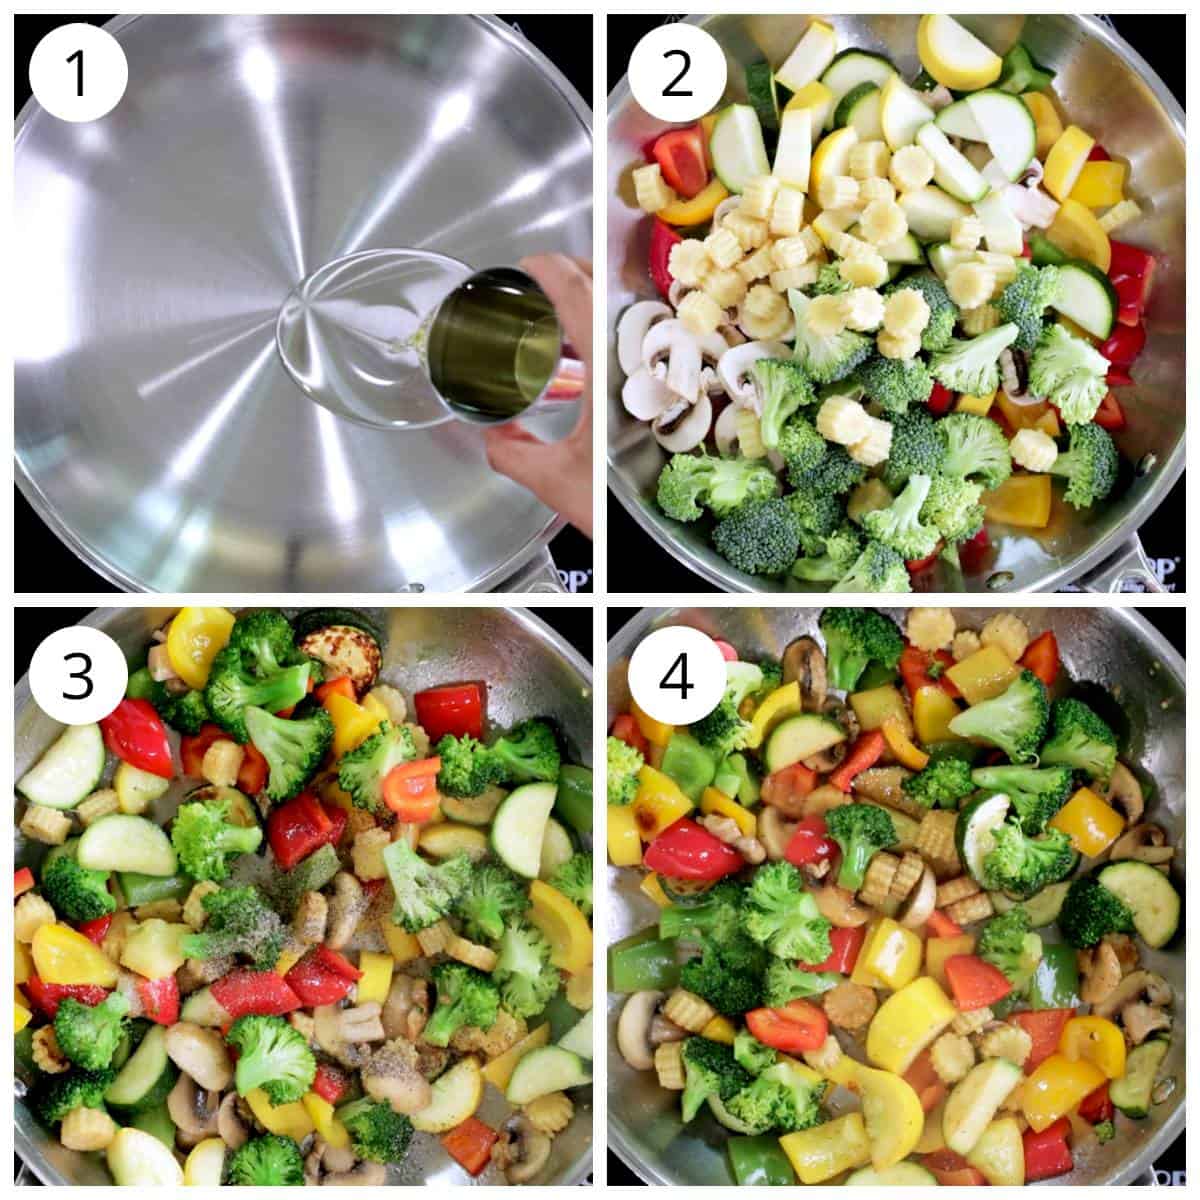 Steps to stir fry vegetables for hot garlic sauce